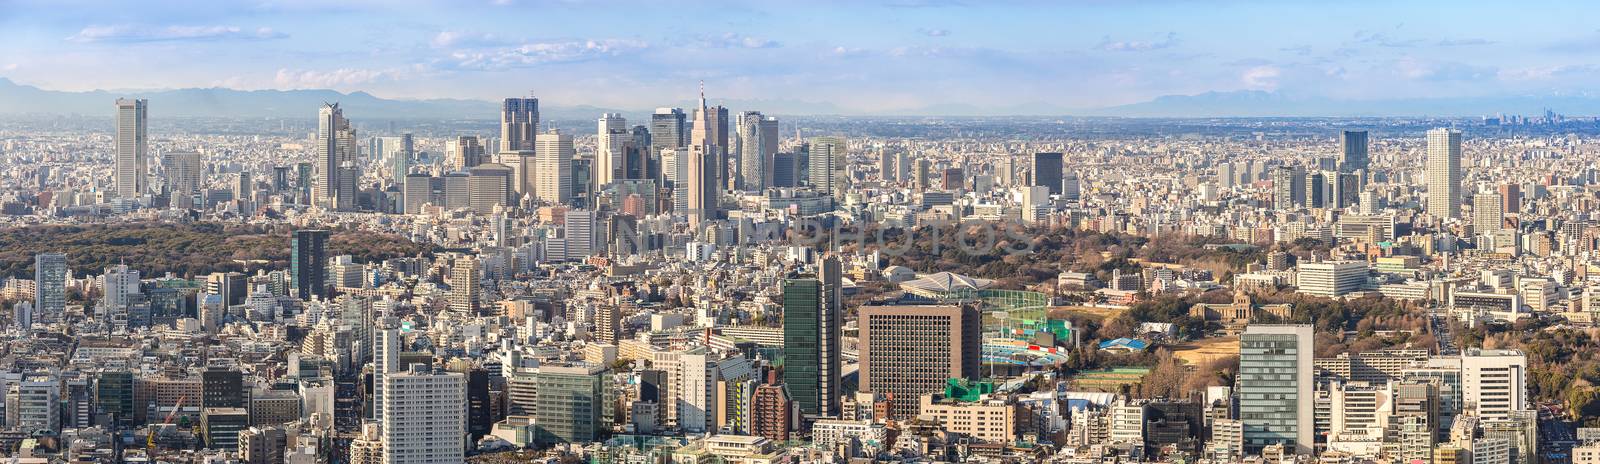 Tokyo Shinjuku skylines by vichie81